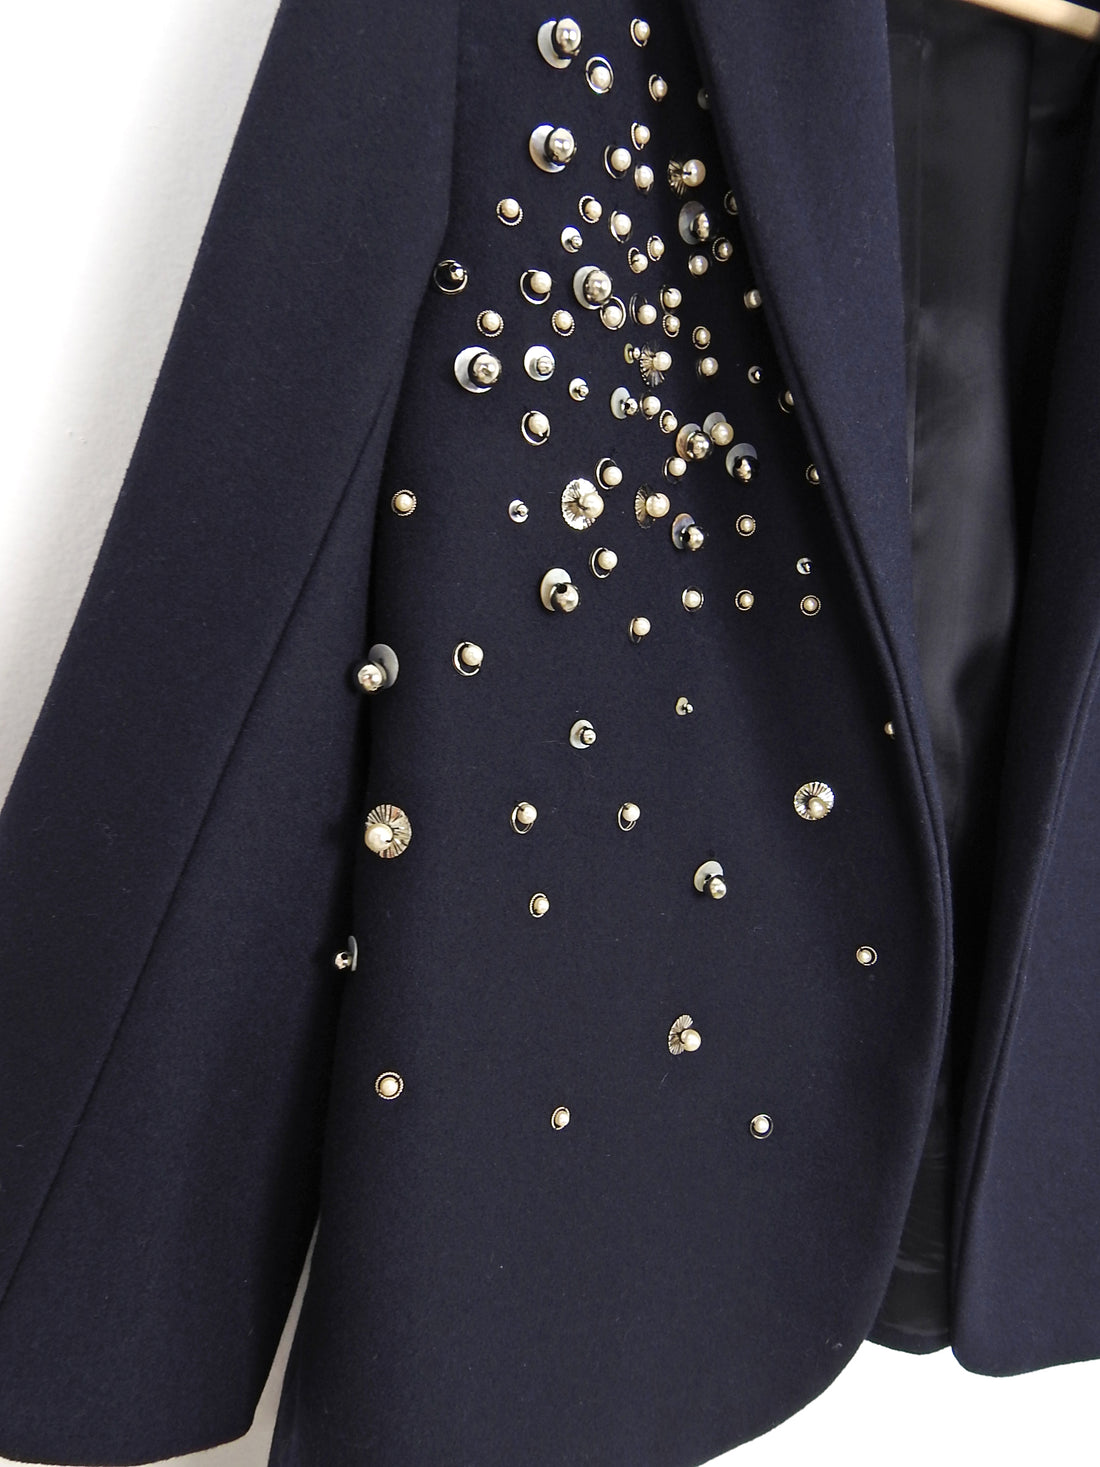 Dries Van Noten Navy Pearl Embellished Jacket – 40 / 8